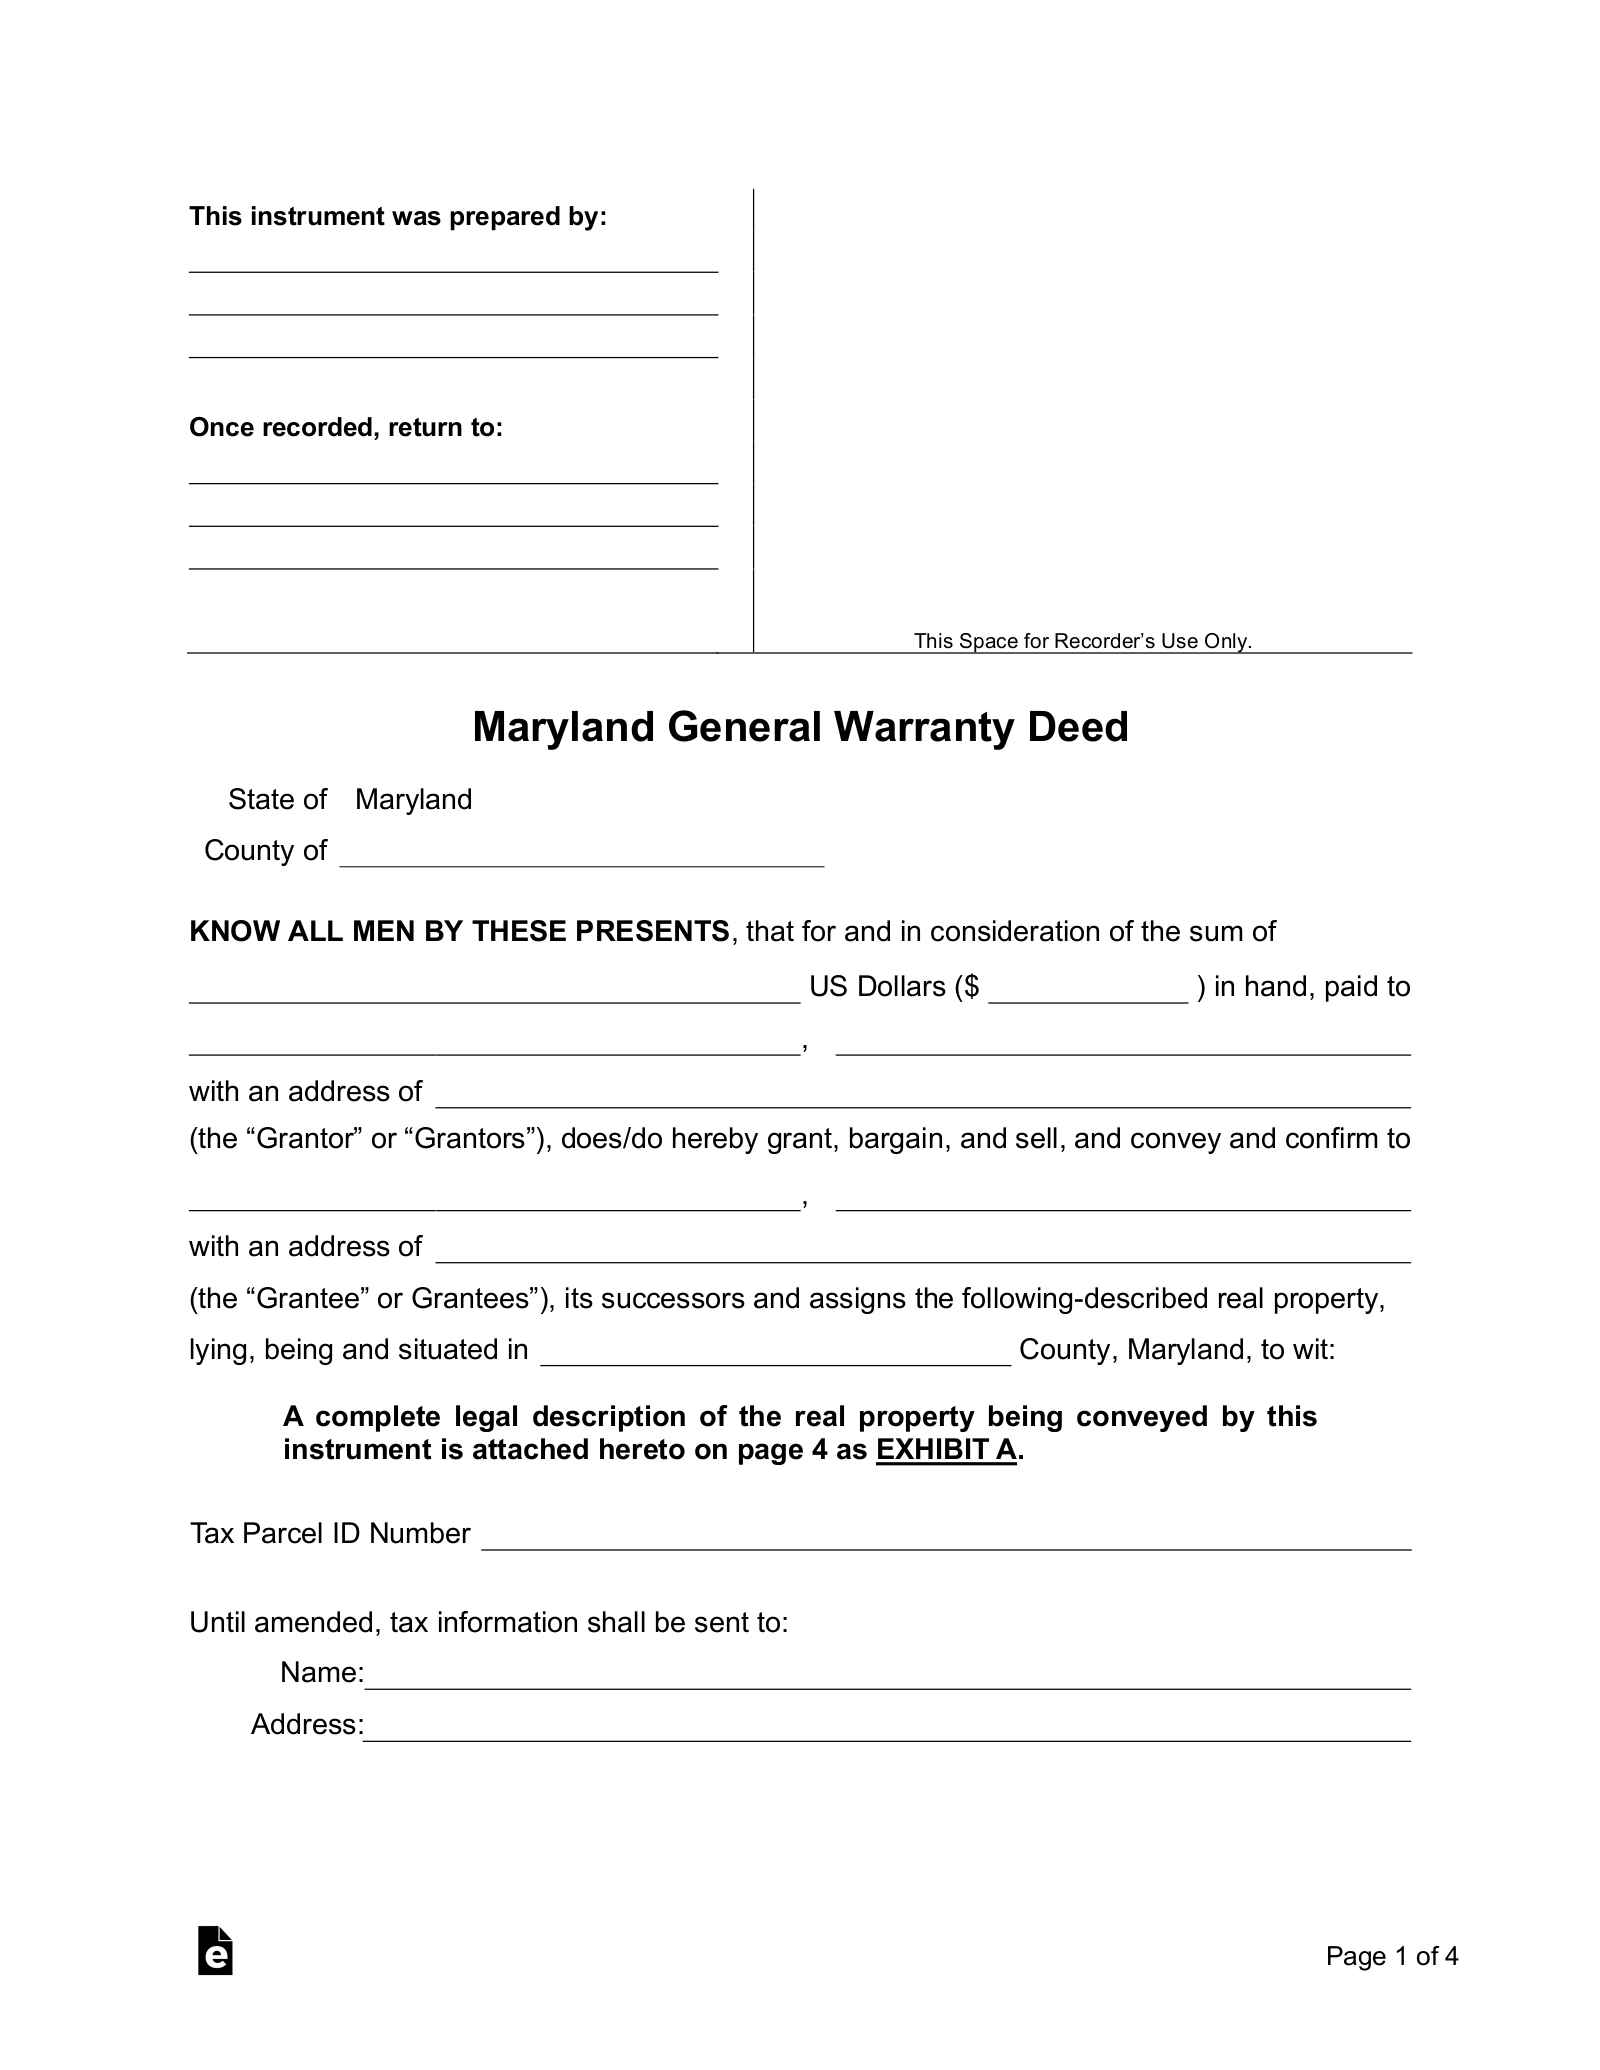 Maryland General Warranty Deed Form